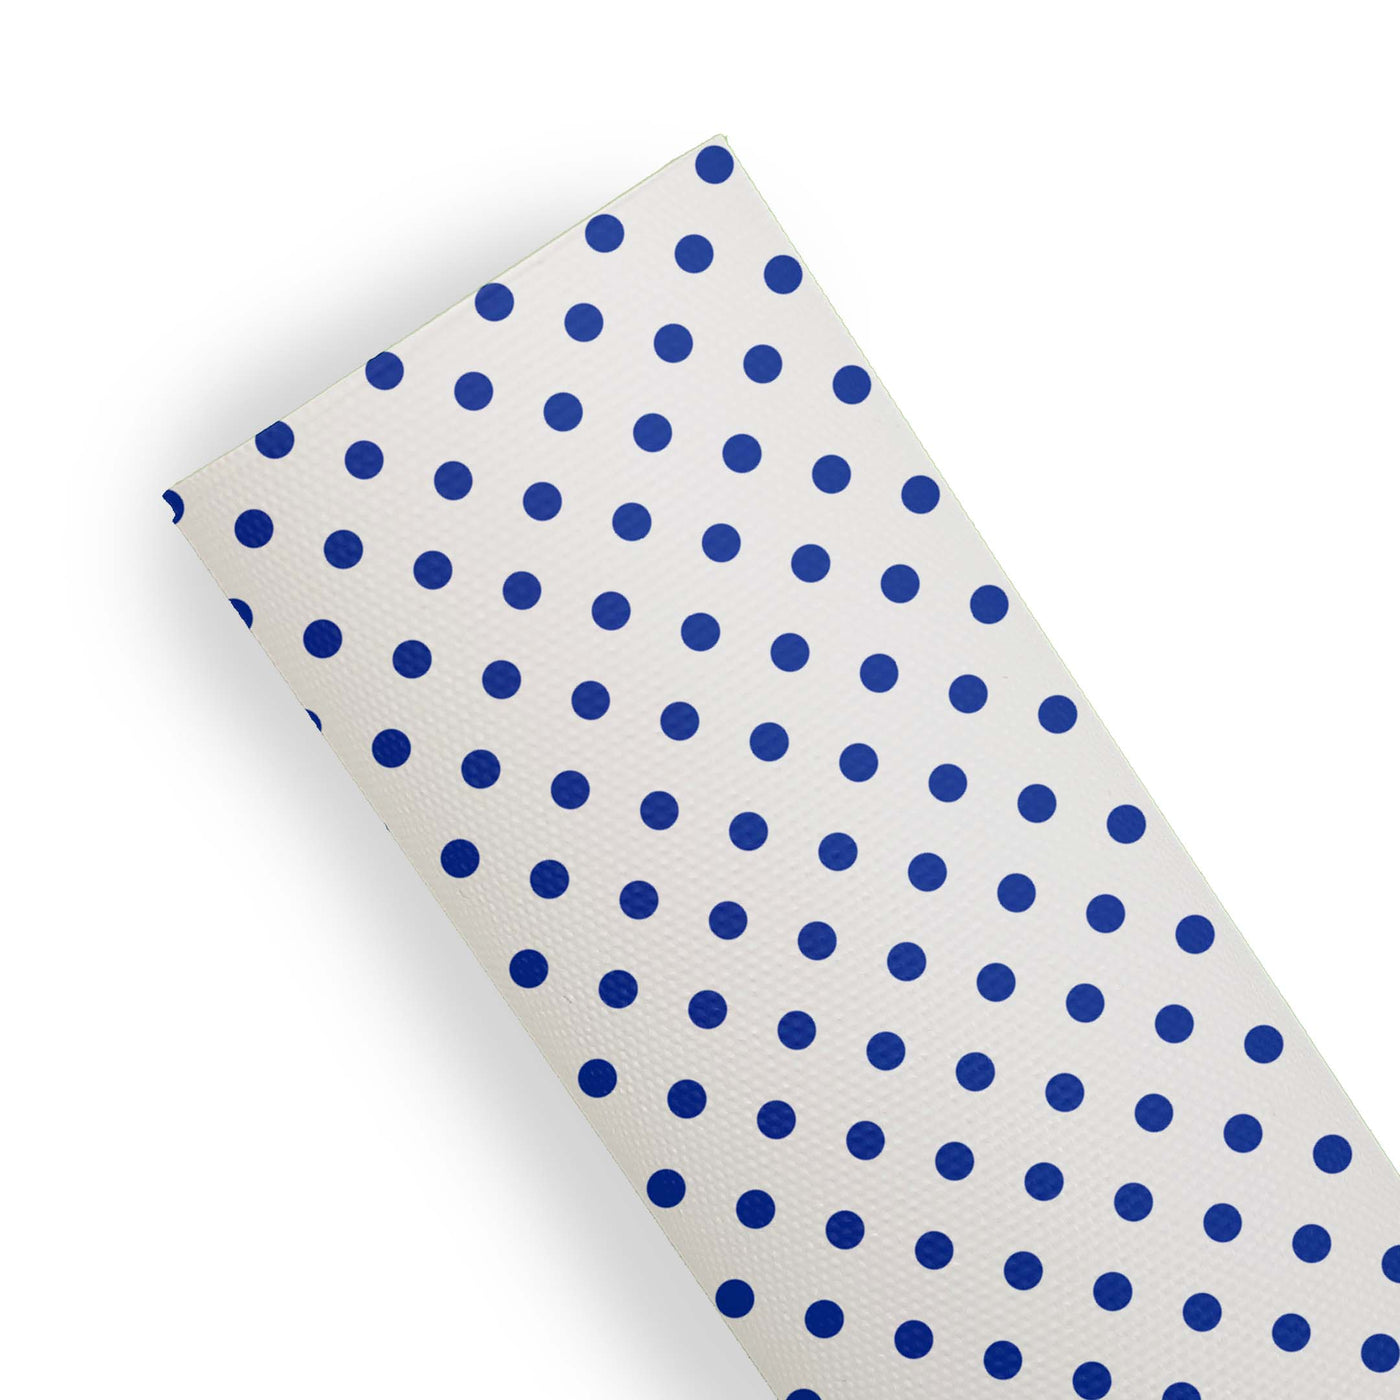 Polka dots - Leatherette vinyl - canvas - choose Fabric material Sheets